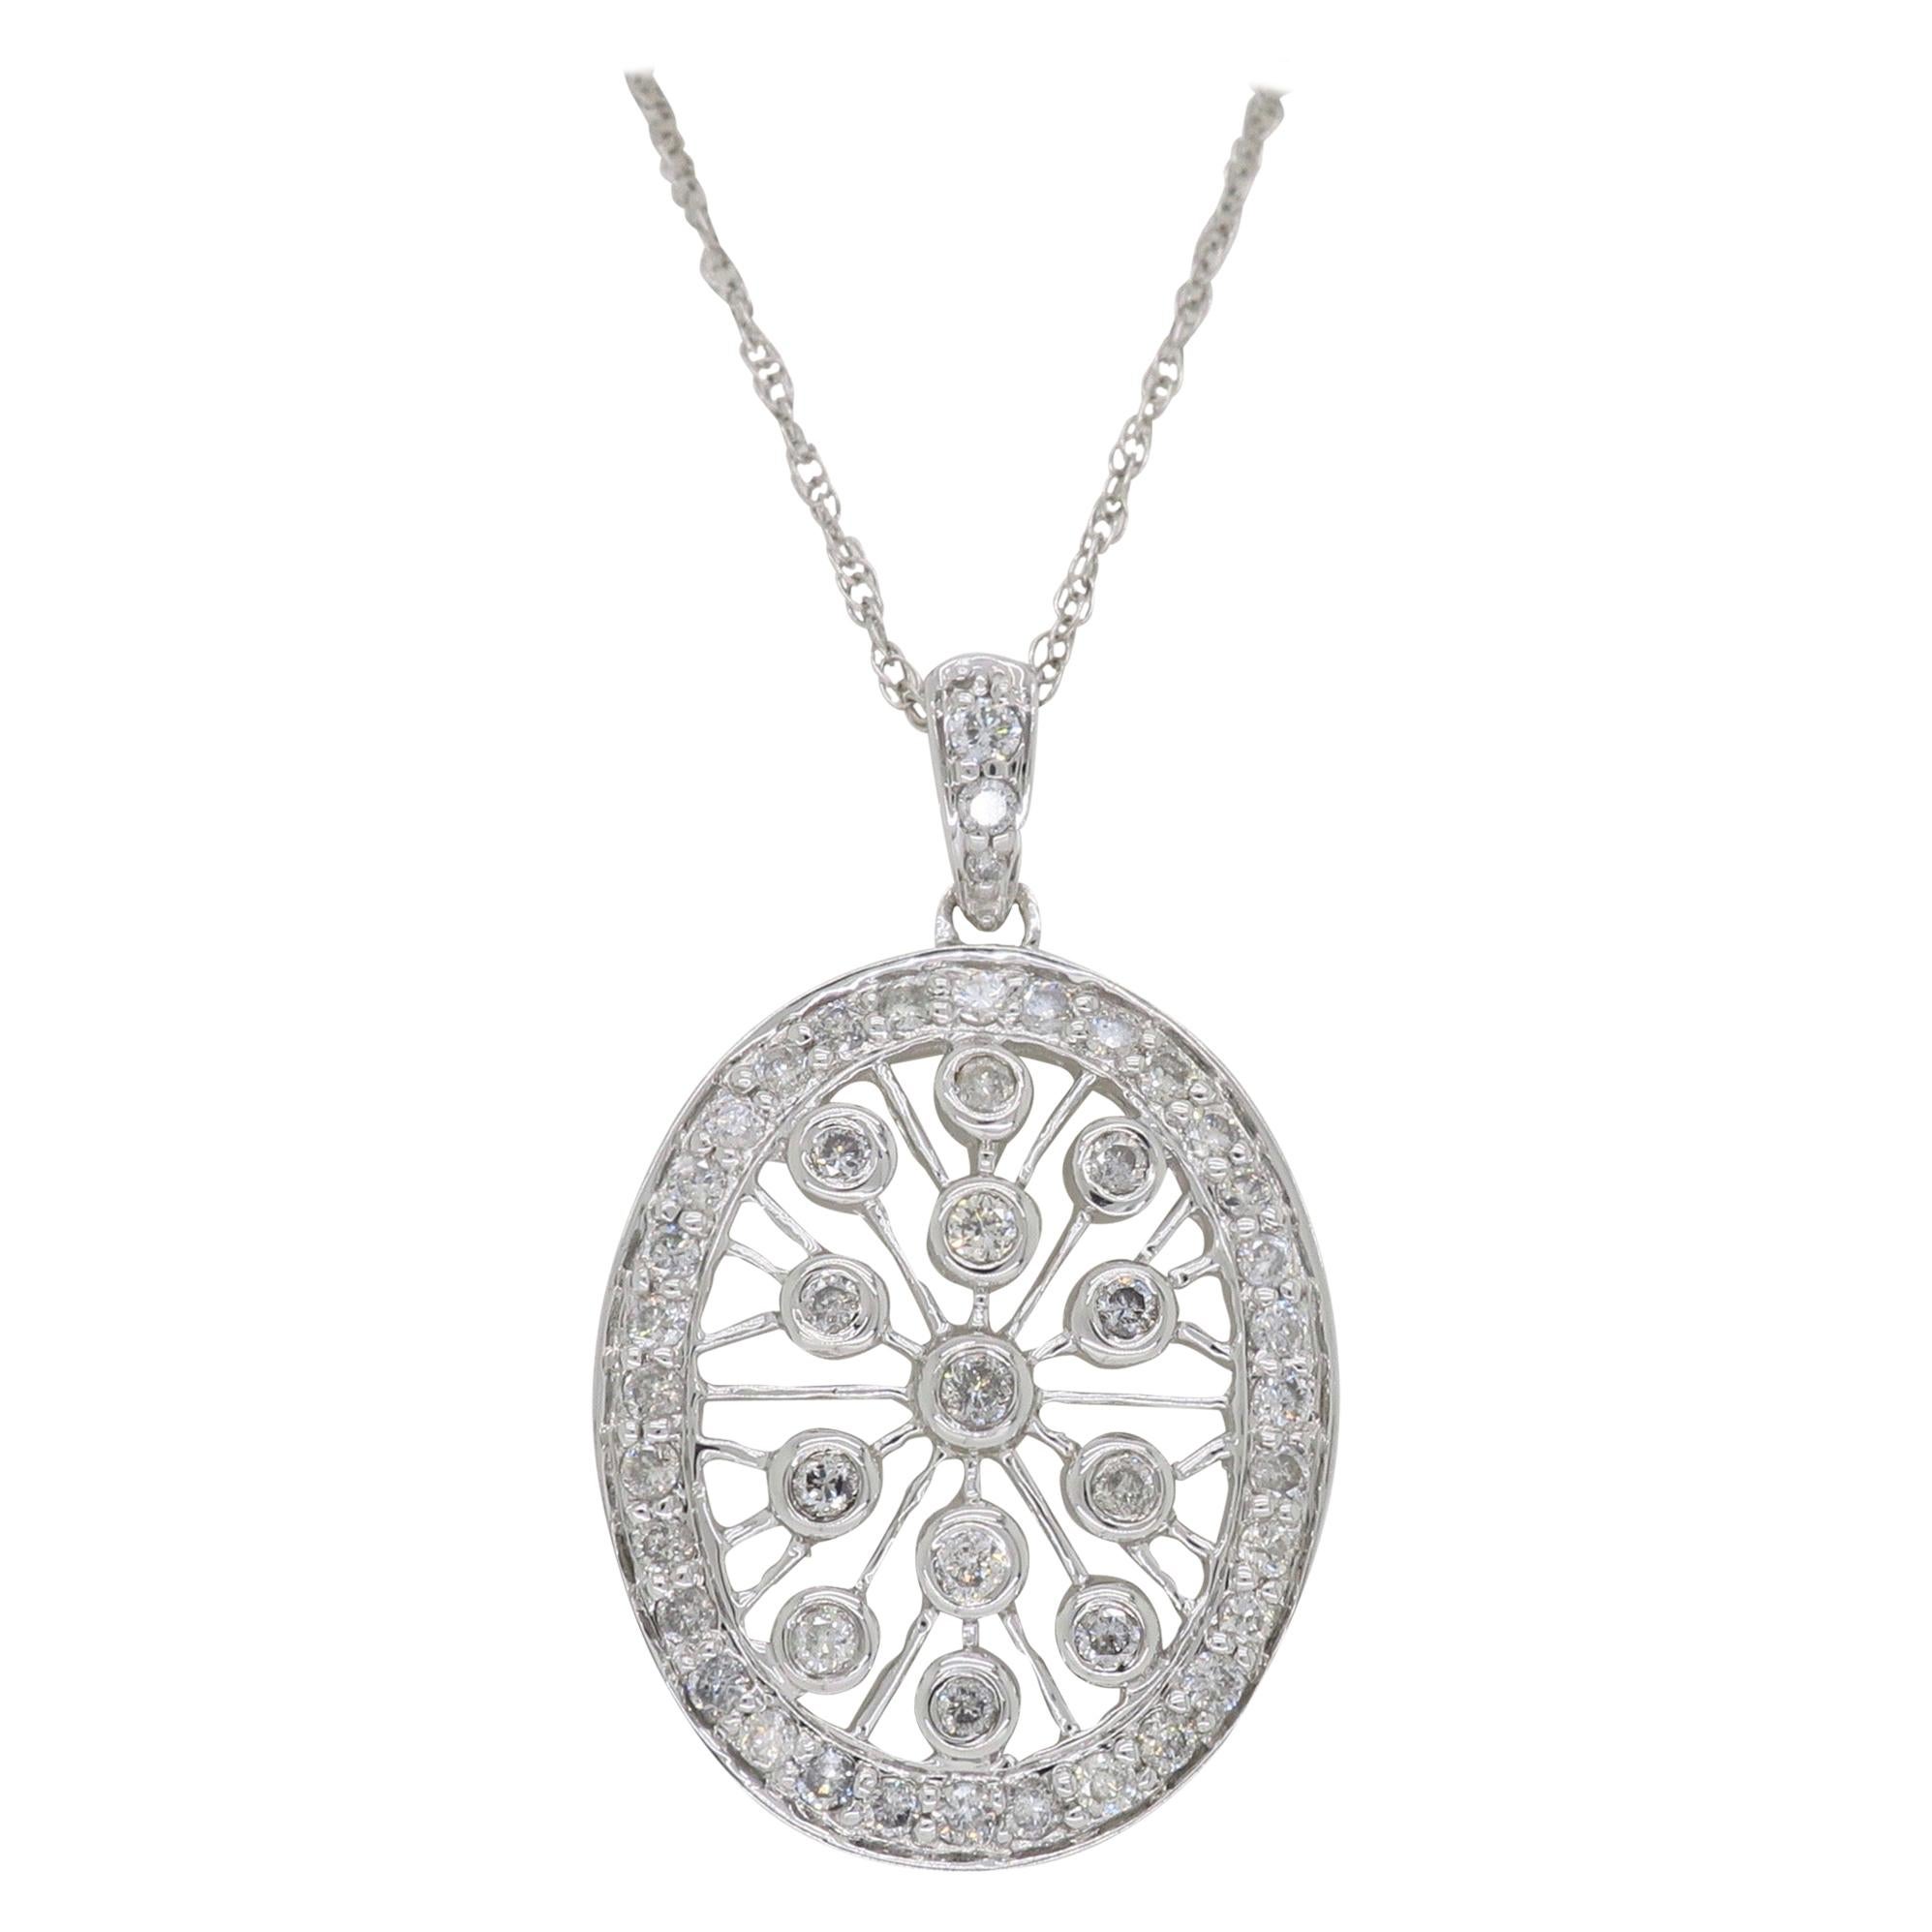 Vintage Inspired Diamond Pendant Necklace